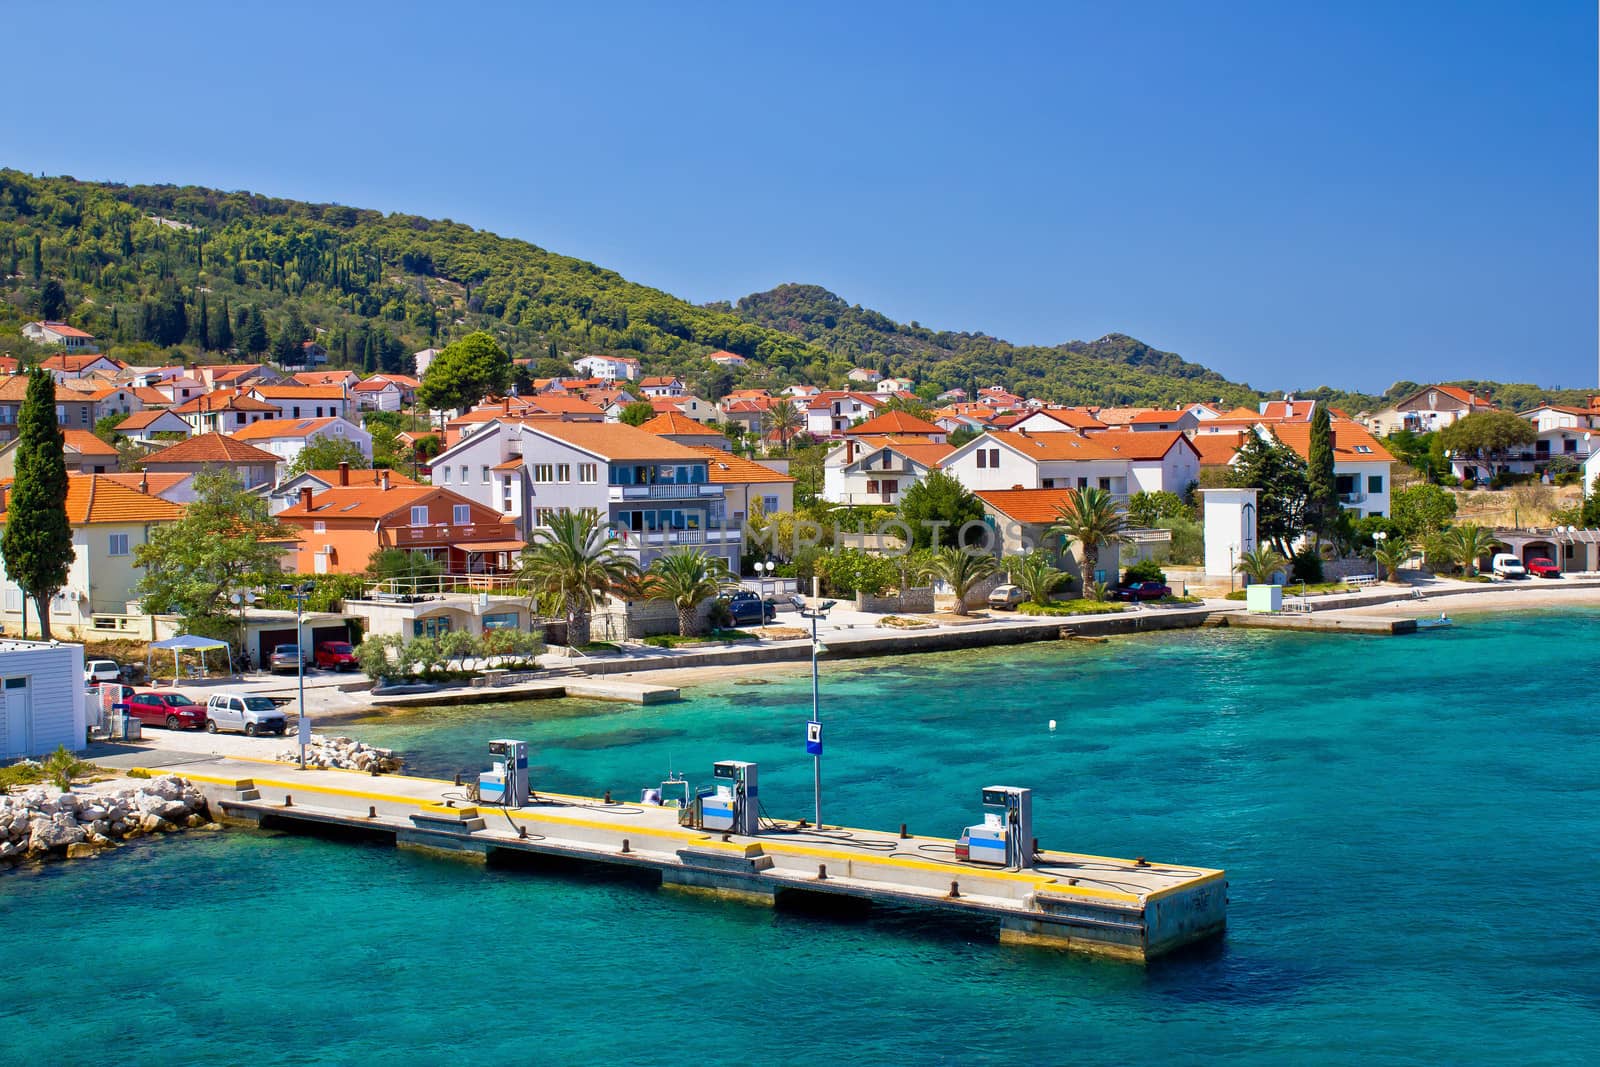 Sea gas station for boats, Island of Ugljan, Croatia